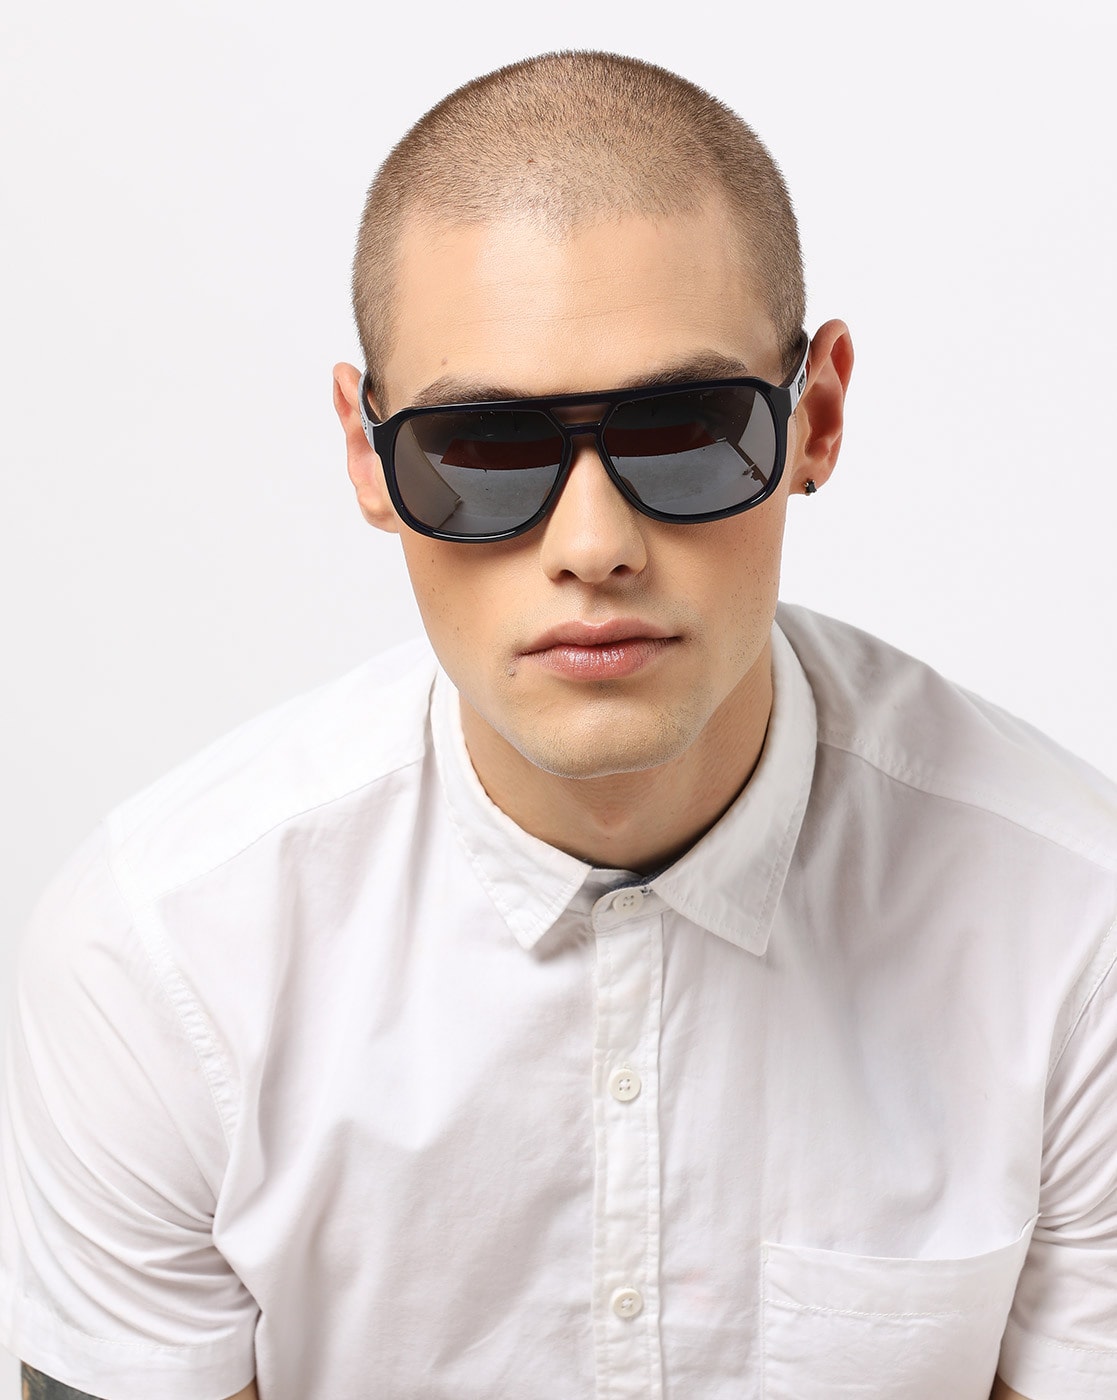 reebok sunglasses online shopping